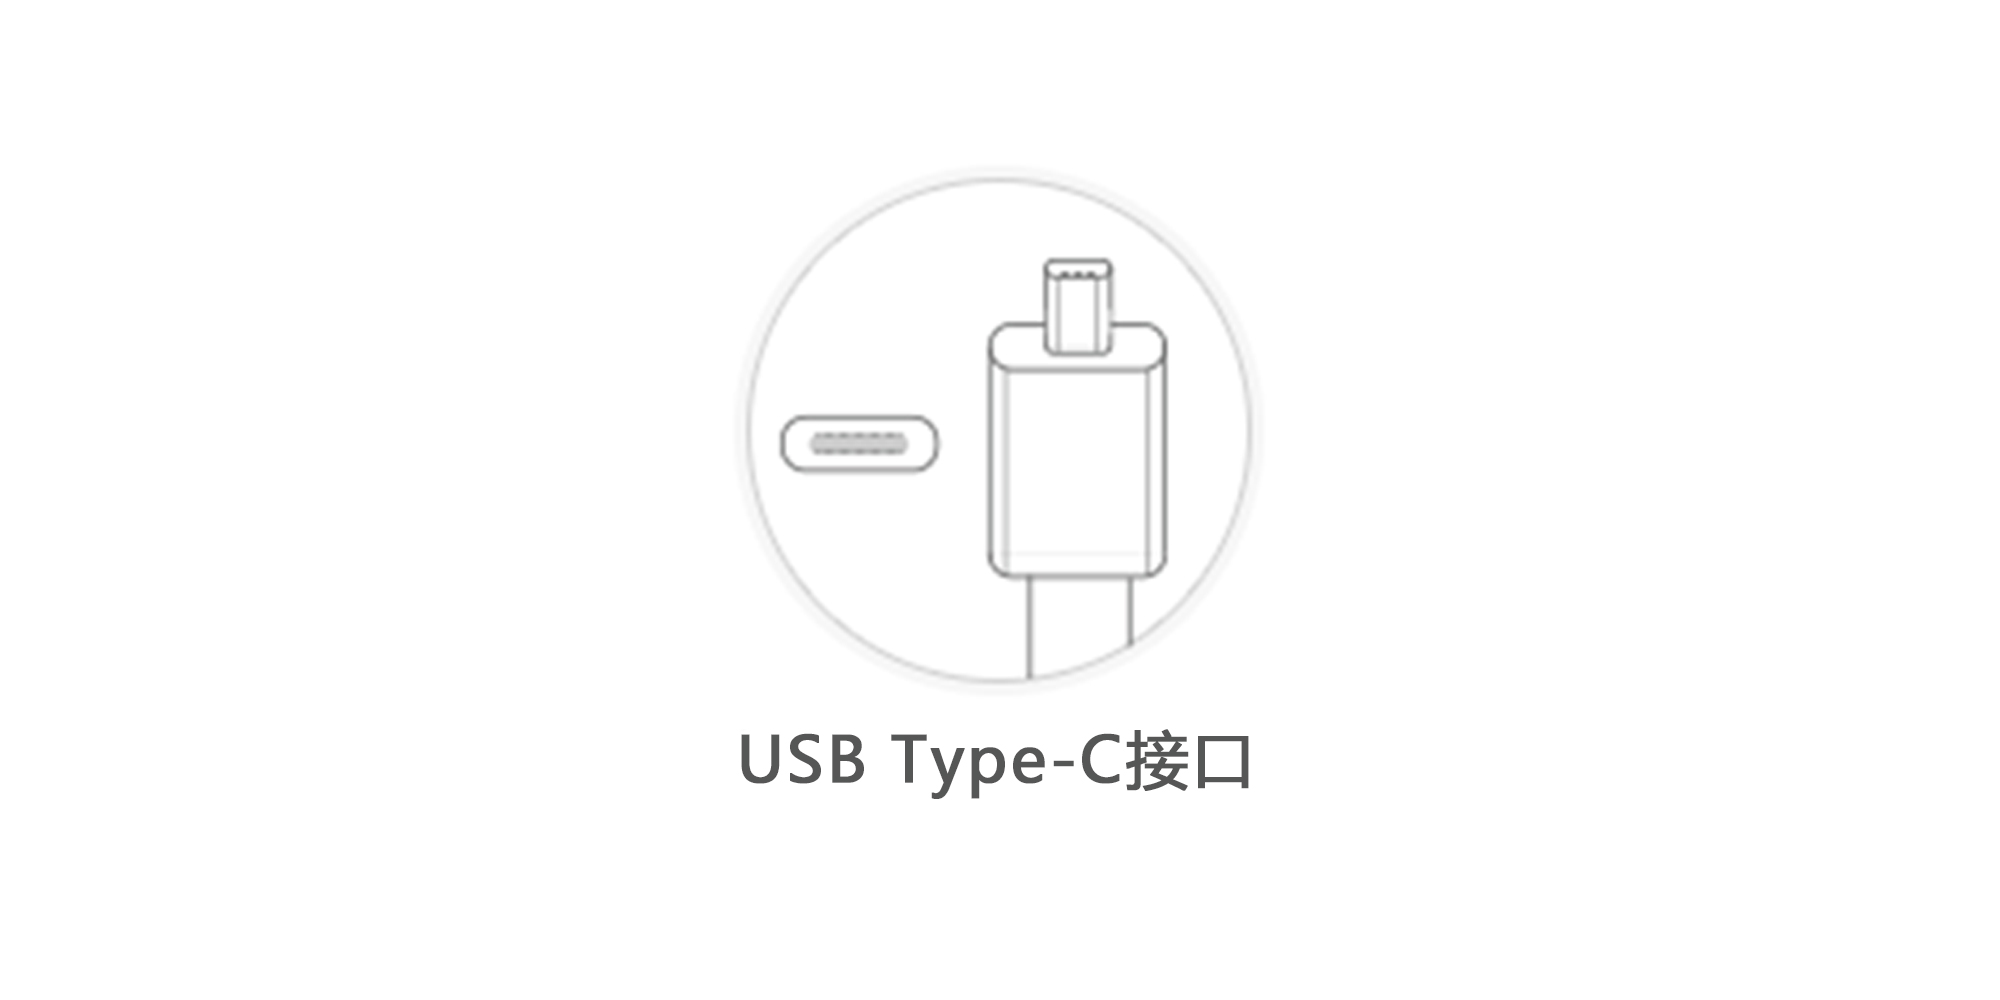 MONITORMATE Probase HD USB TYPE-C 多功能螢幕架